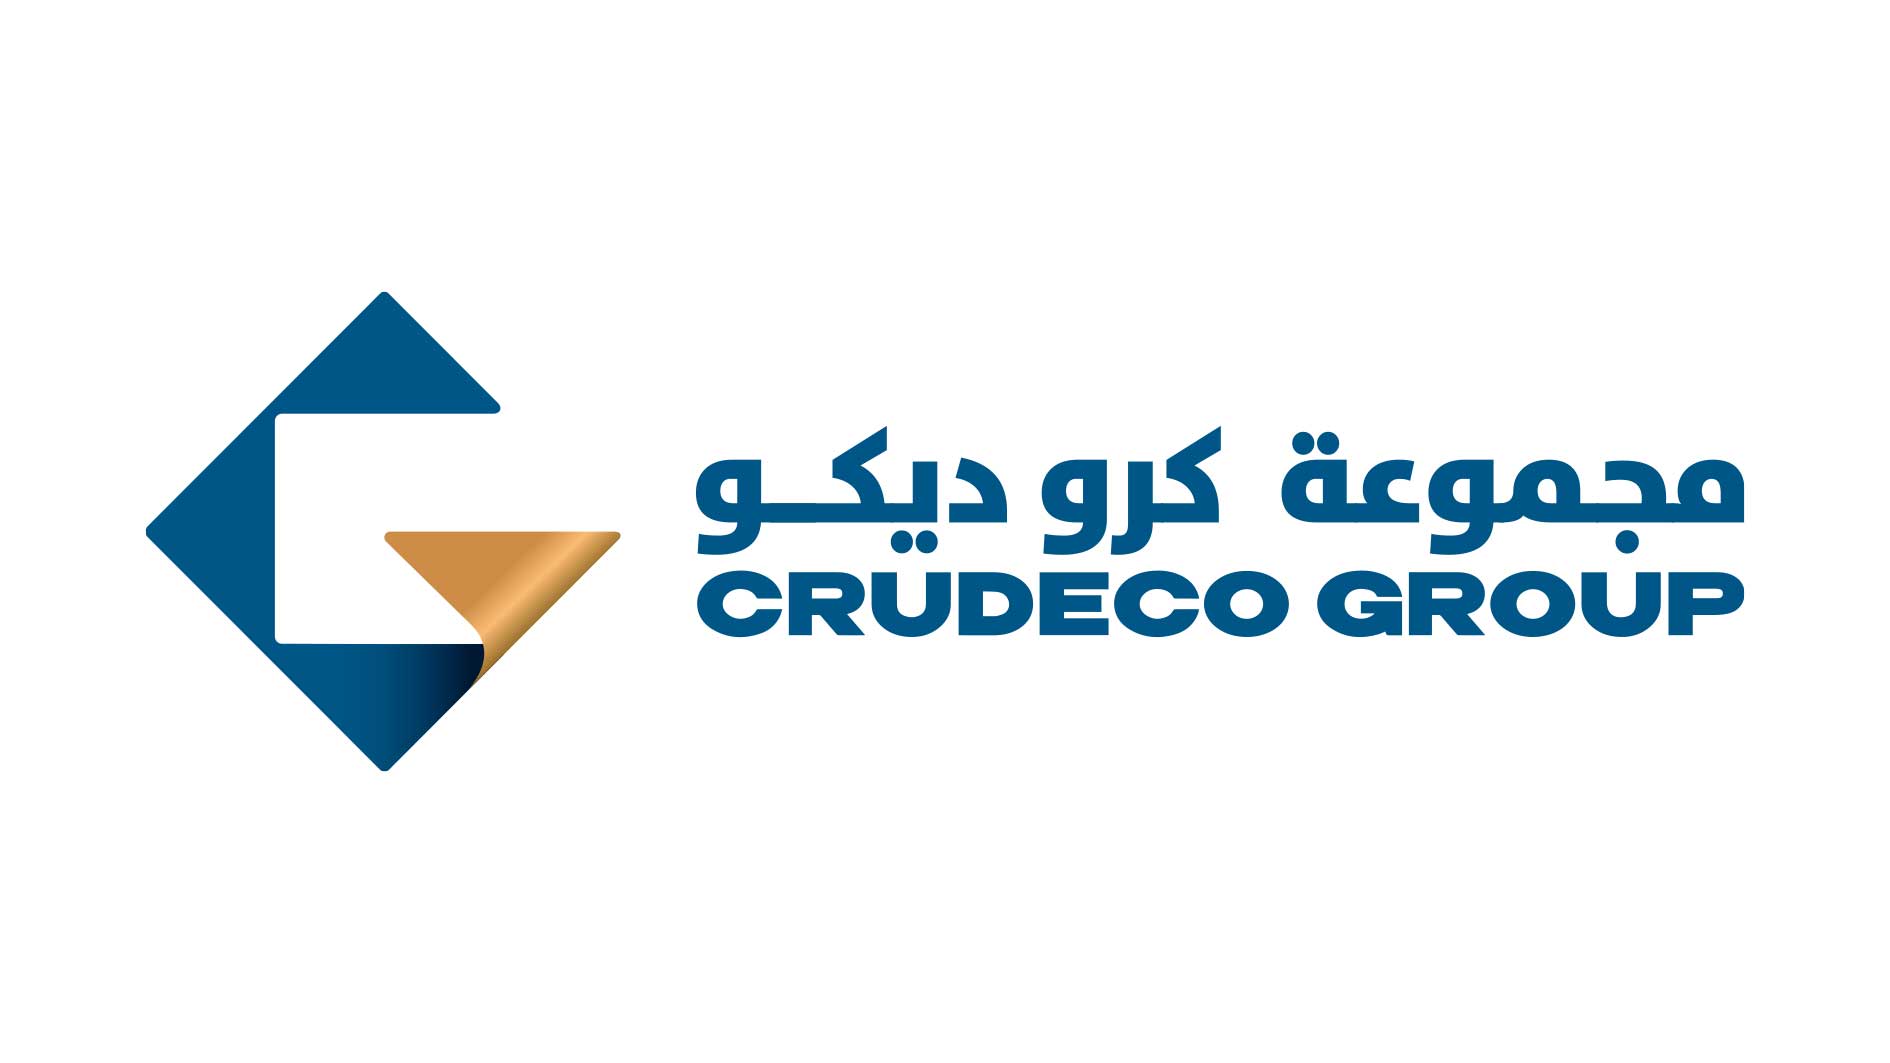 Crudeco Group